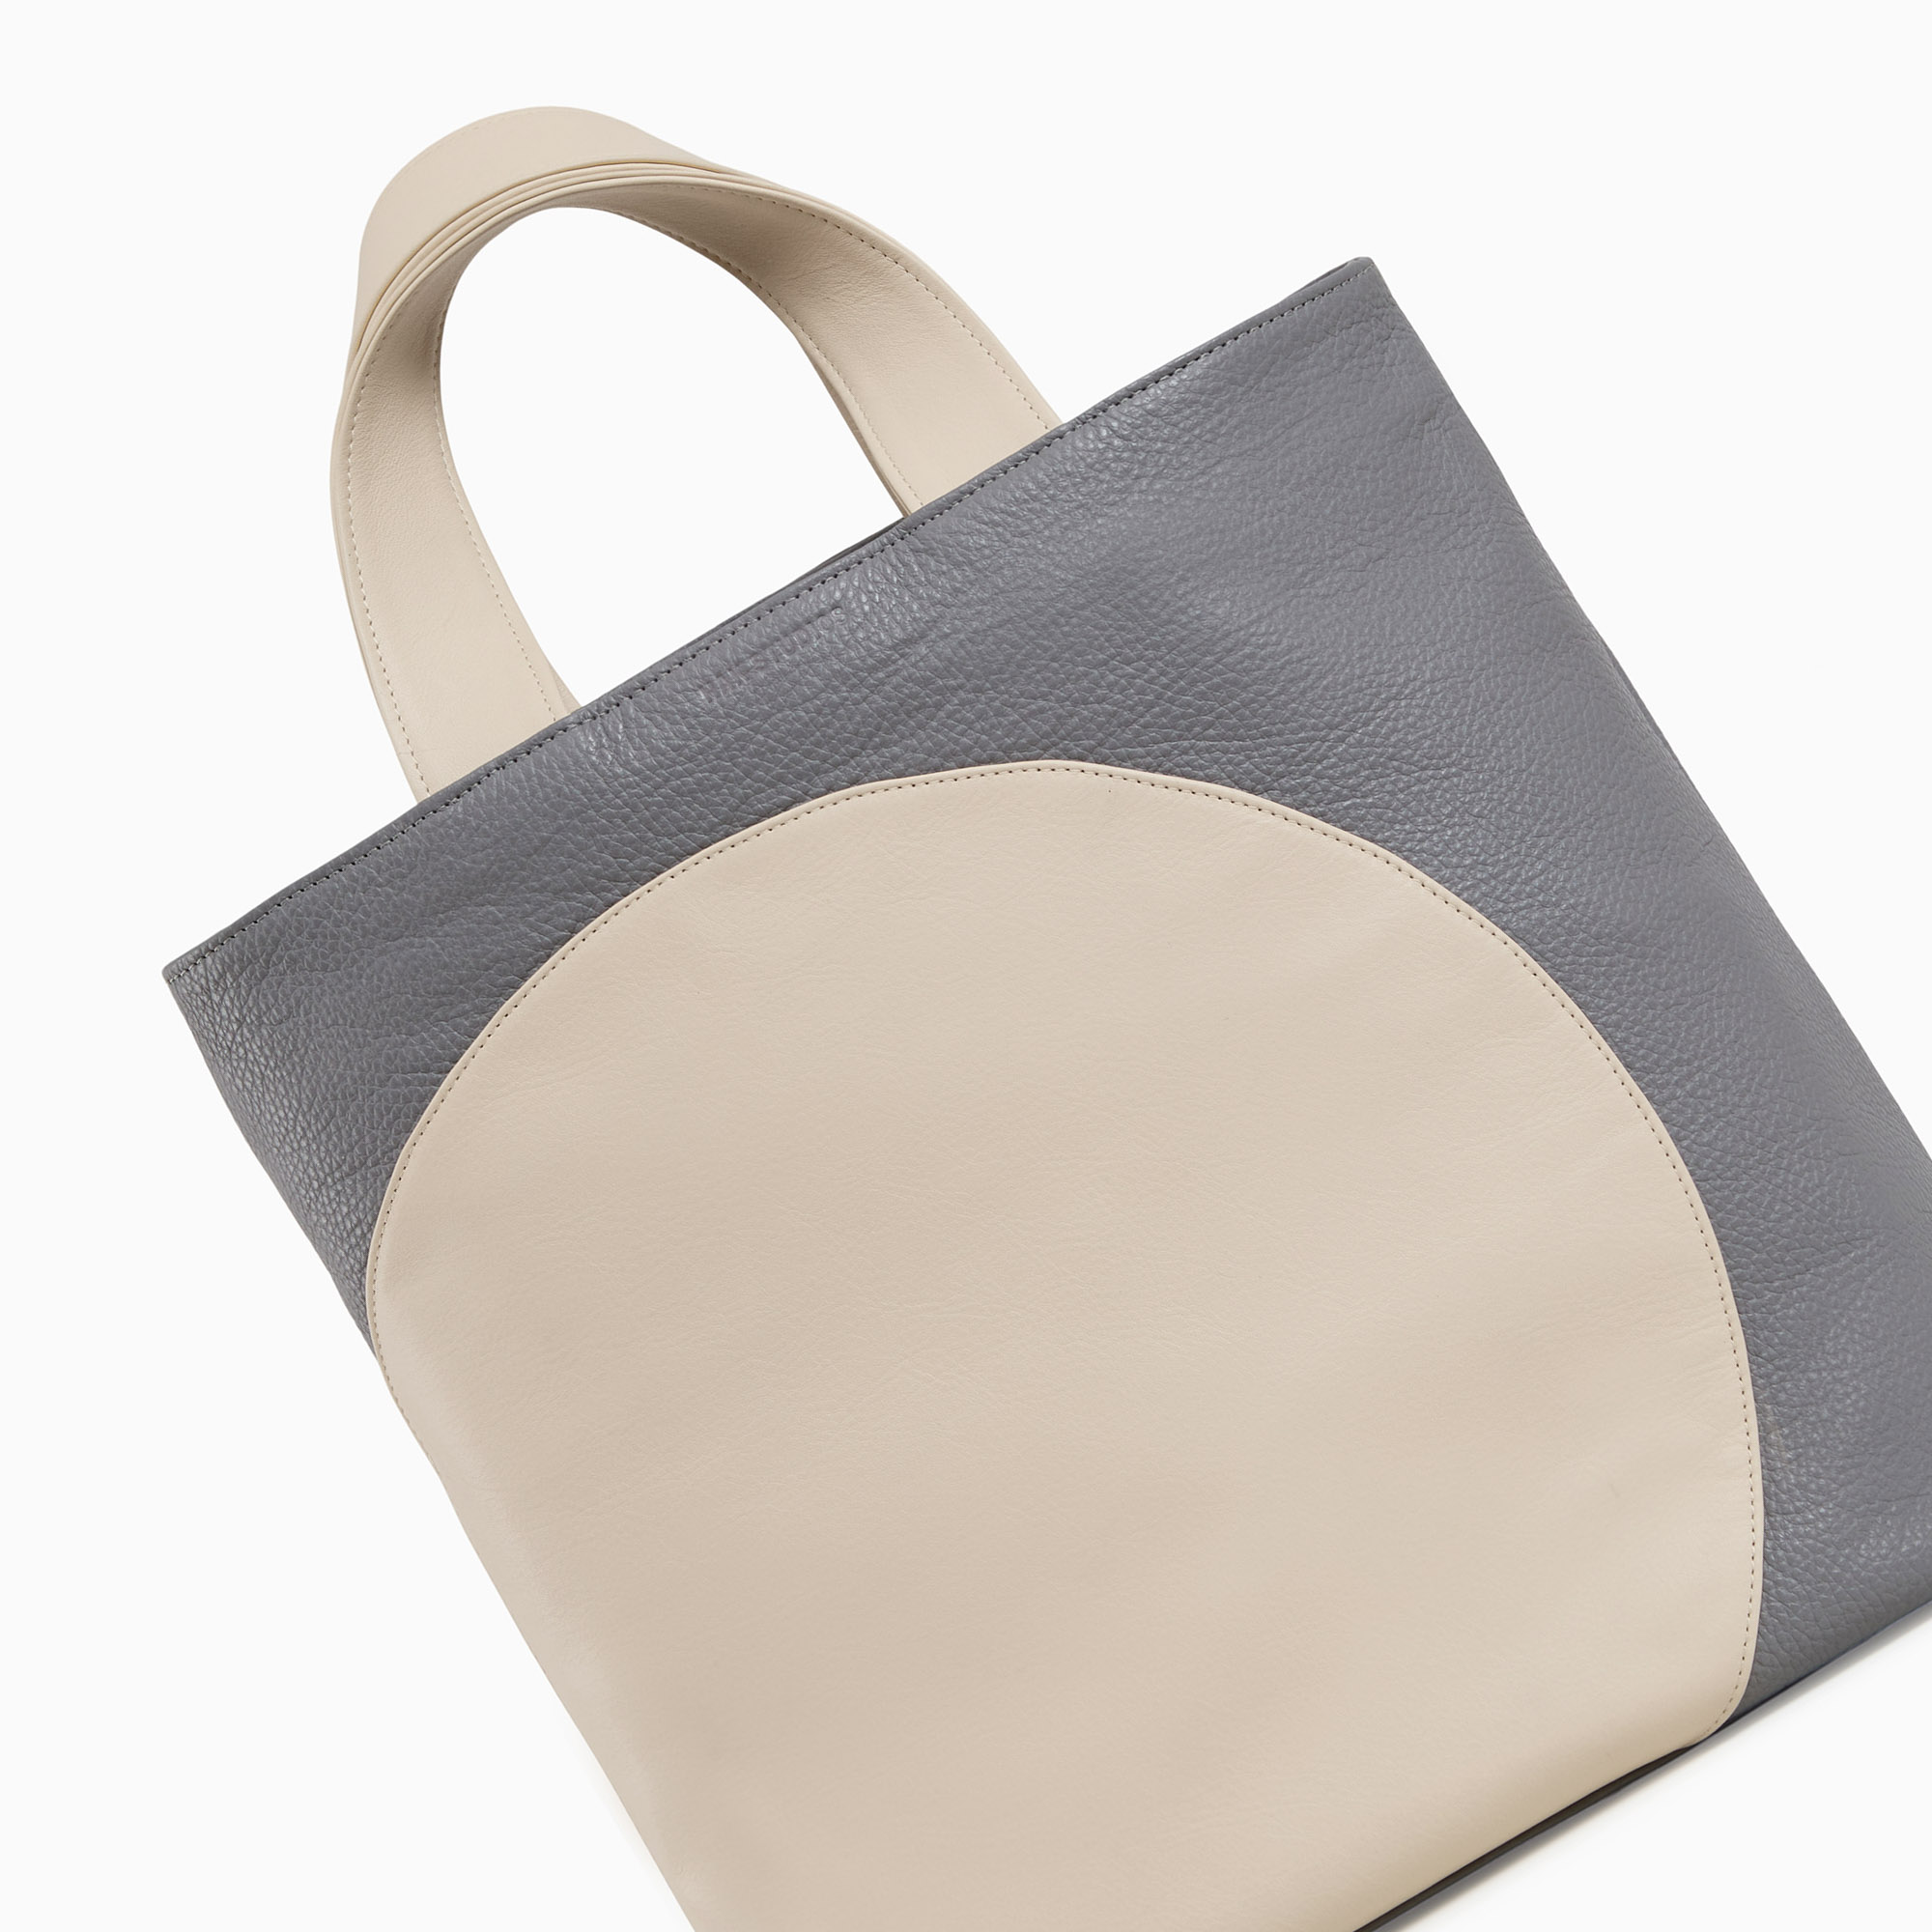 Leather handbag in beige-gray color